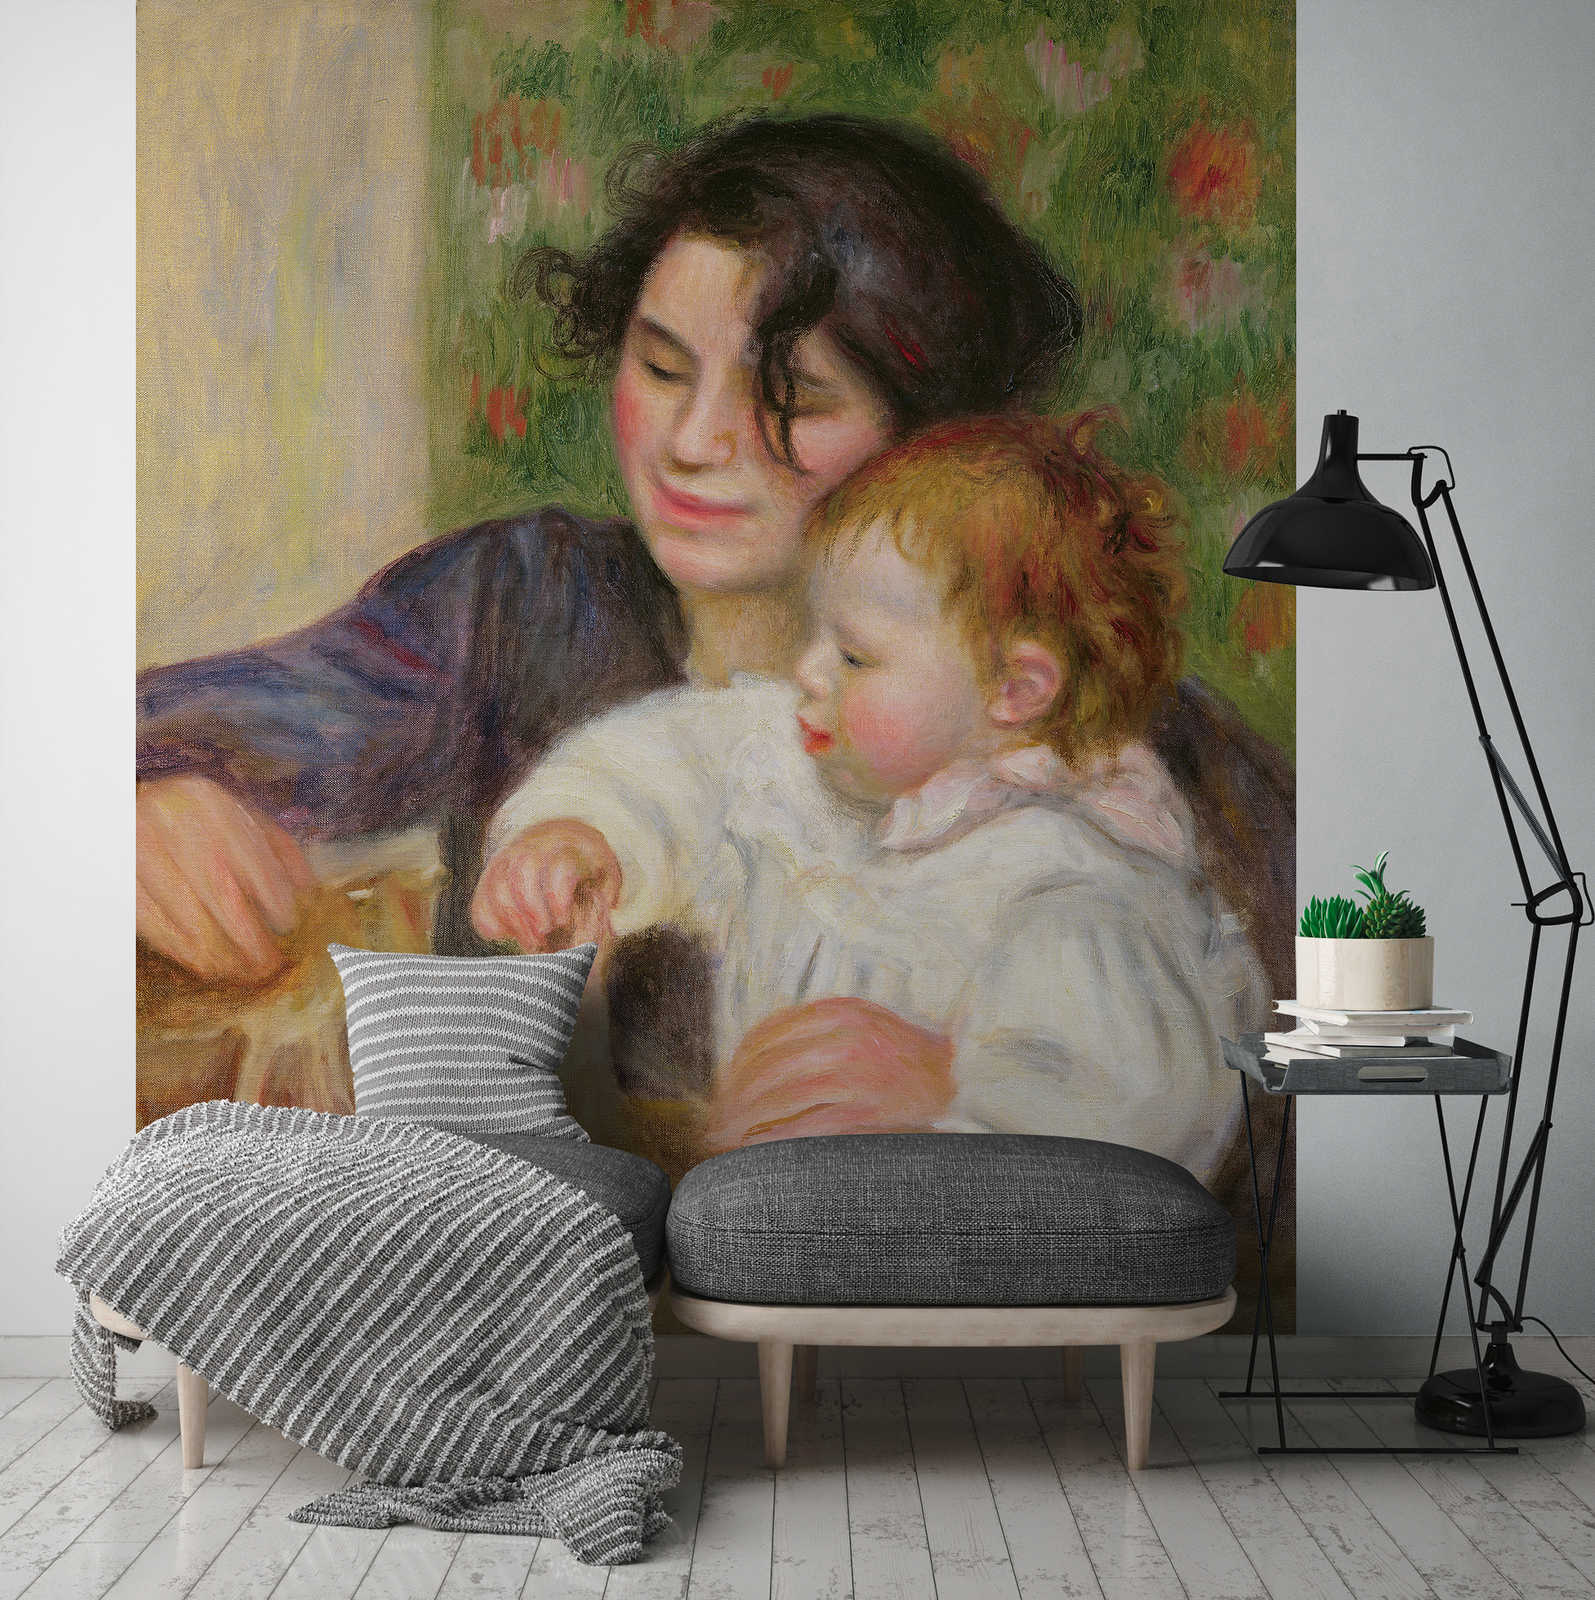             Mural "Gabrielle y Jean" de Pierre Auguste Renoir
        